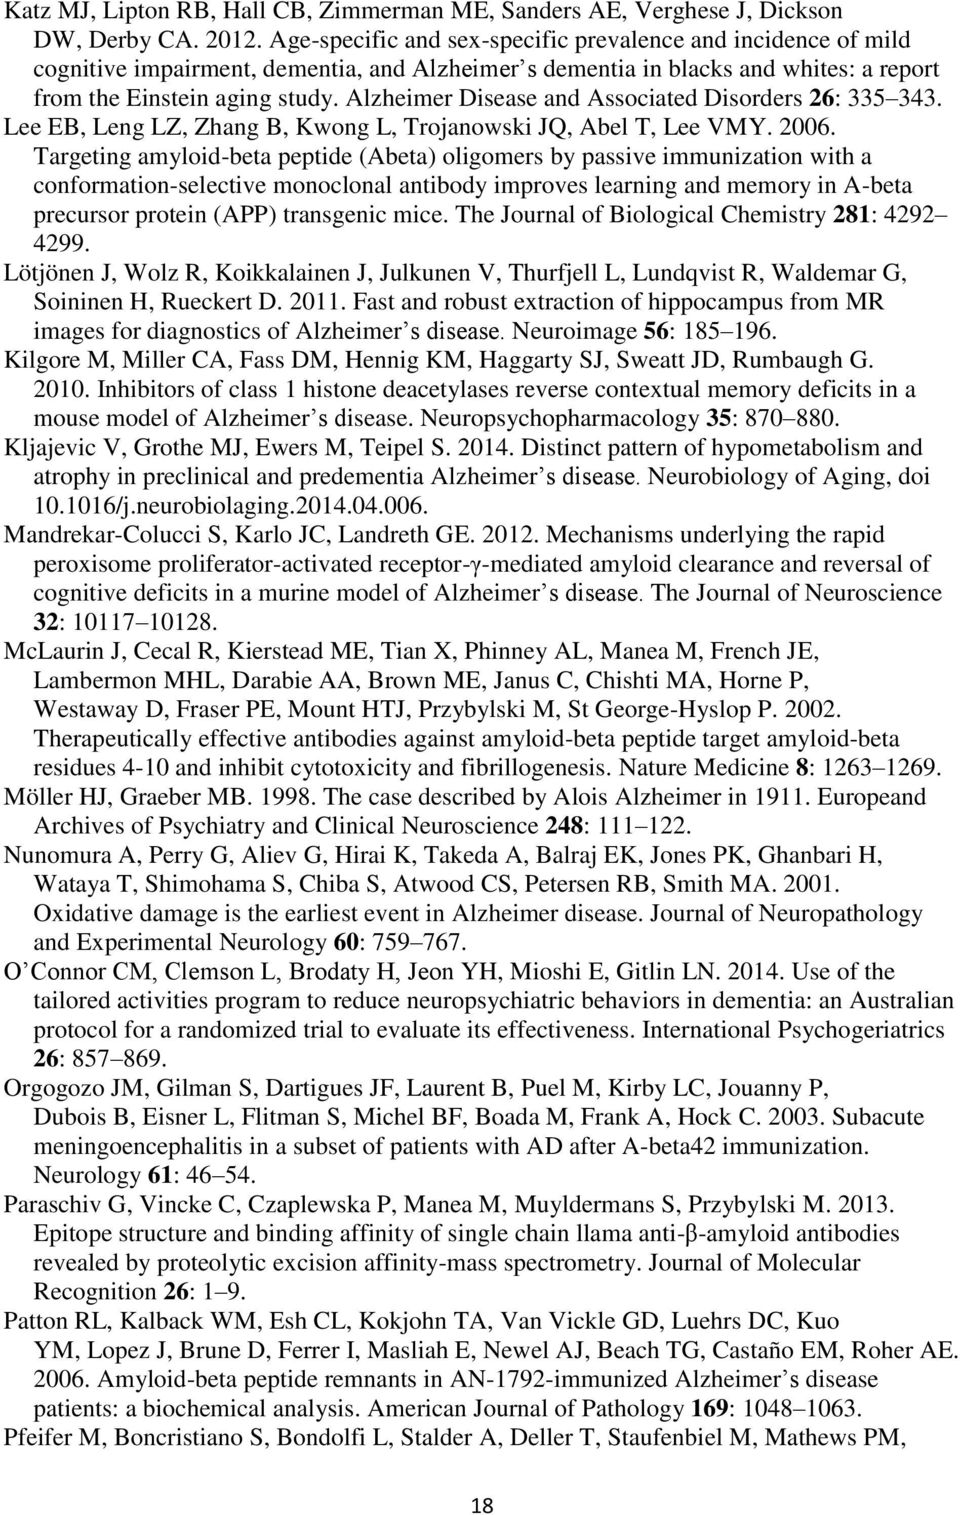 Alzheimer Disease and Associated Disorders 26: 335 343. Lee EB, Leng LZ, Zhang B, Kwong L, Trojanowski JQ, Abel T, Lee VMY. 2006.